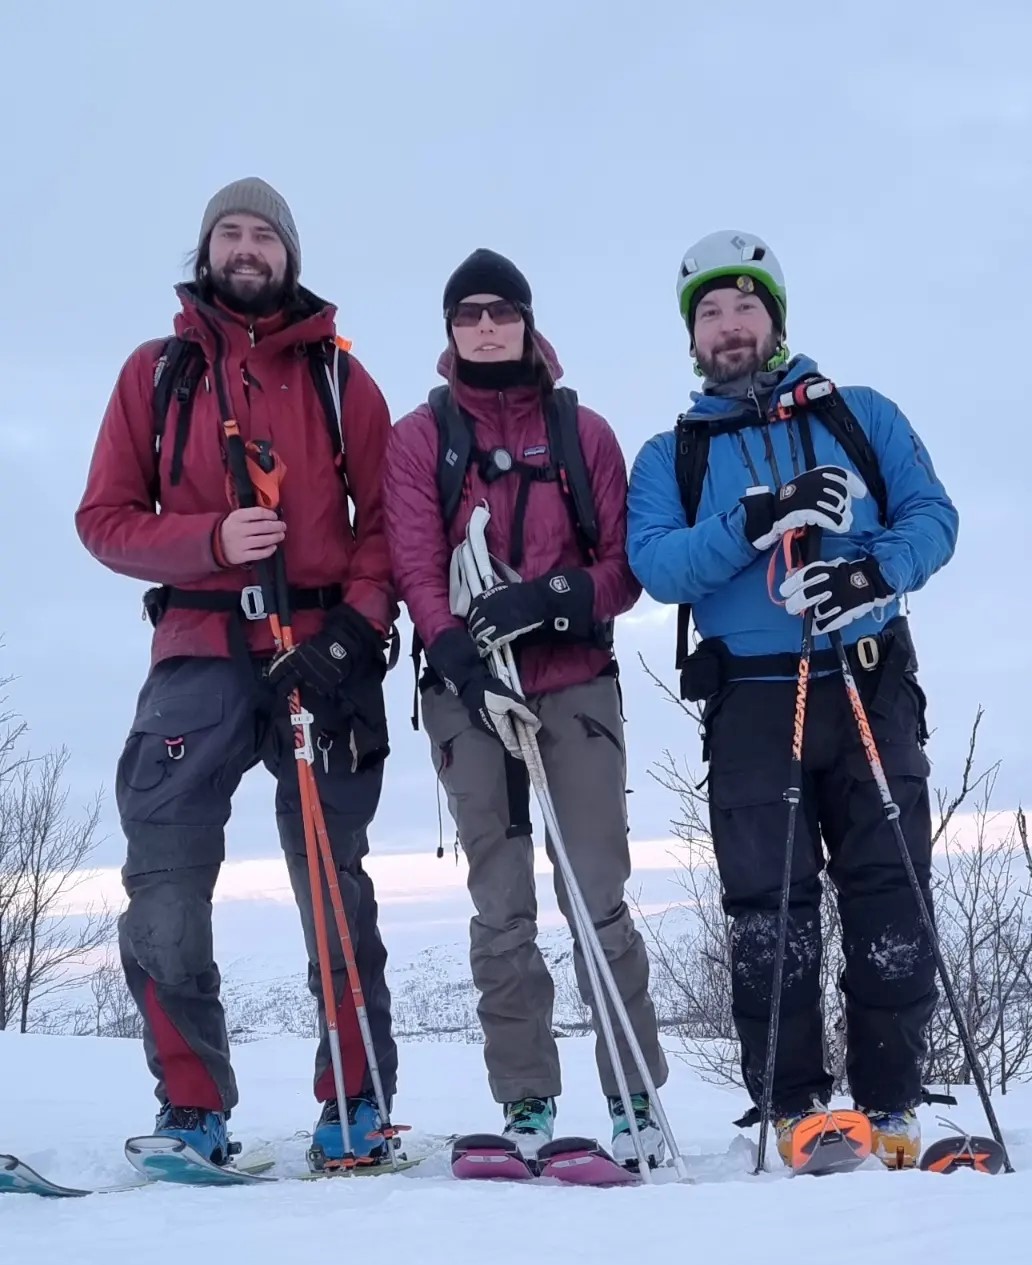 Stefan Hedlund, Moa Almquist och Erik Bostr&ouml;m poserar framf&ouml;r kameran i skidutrusnitn och sn&ouml;kl&auml;dda fj&auml;ll i bakgrunden.